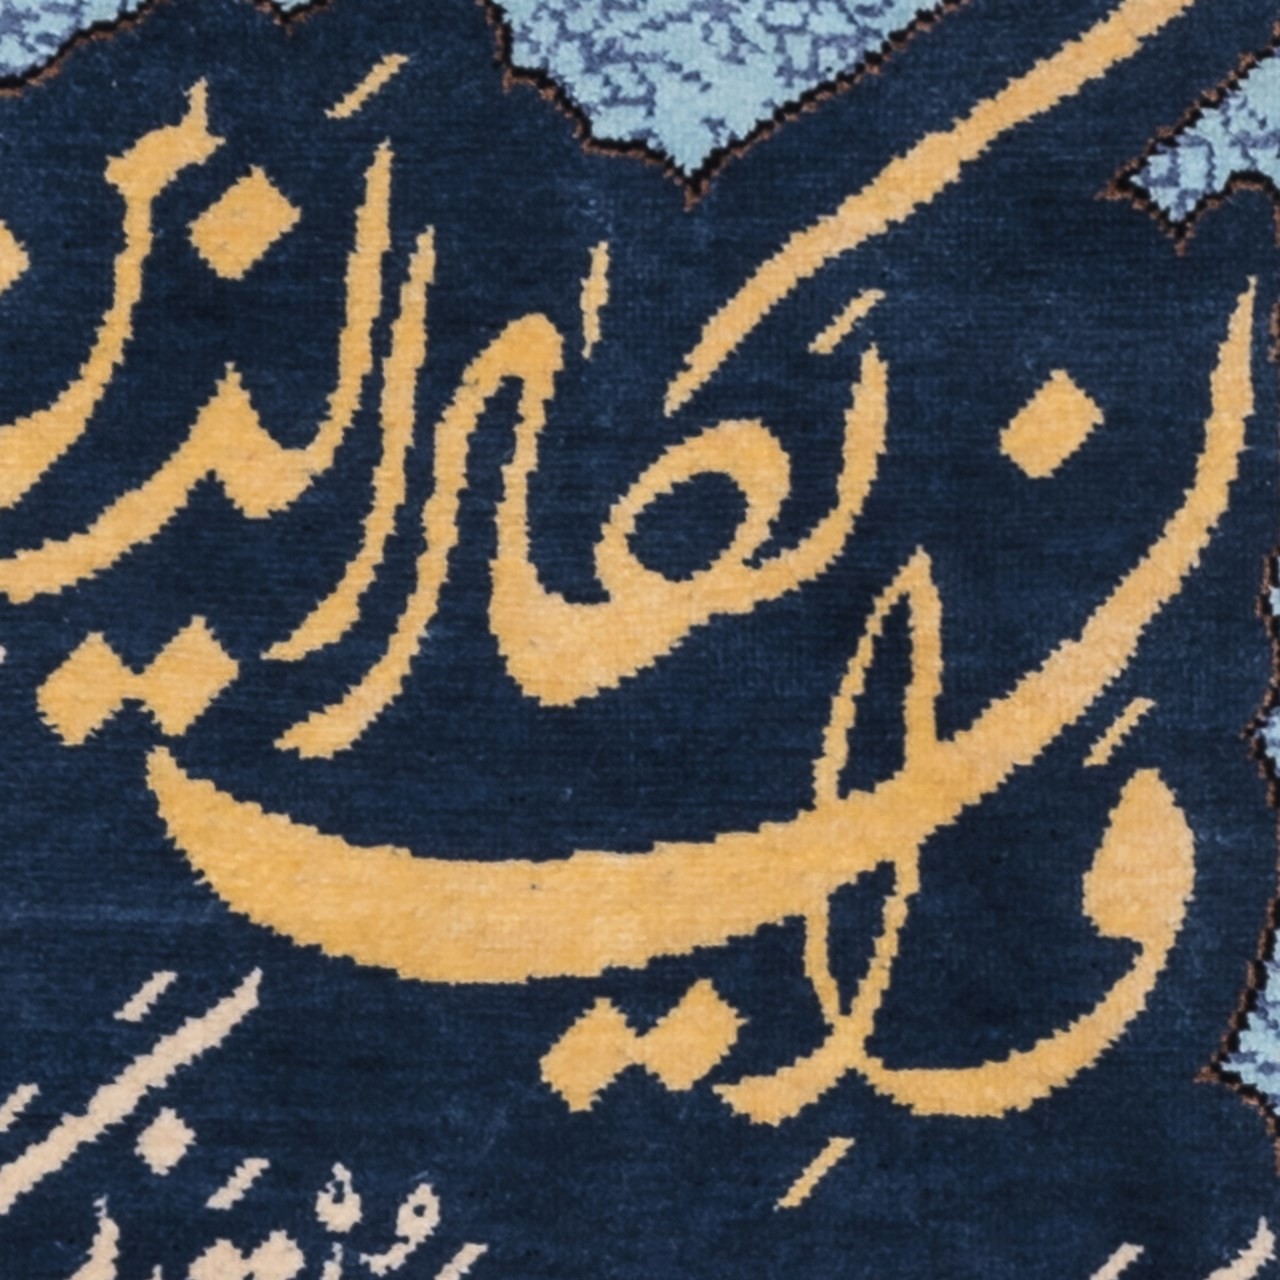 Pictorial Tabriz Carpet Ref: 901340